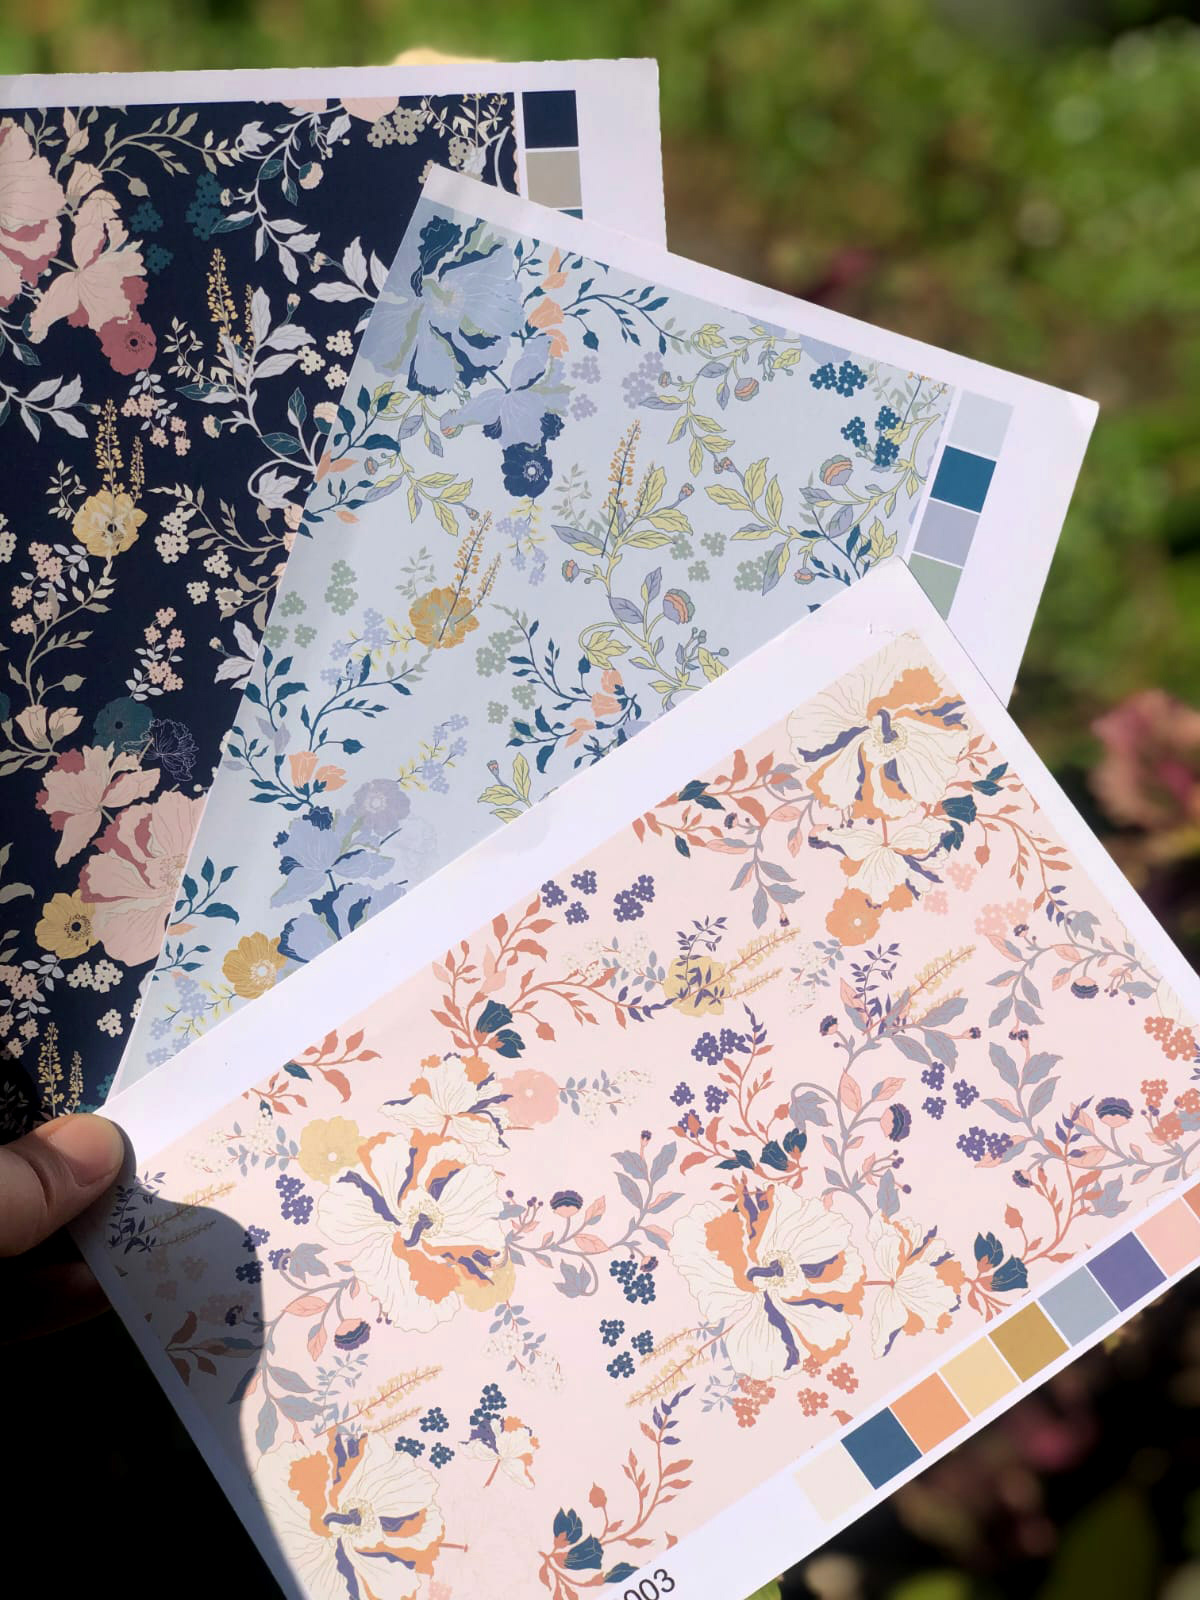 patterndesign textiledesign floralpattern pattern floral fabricdesign Patterns illustrations SurfacePattern